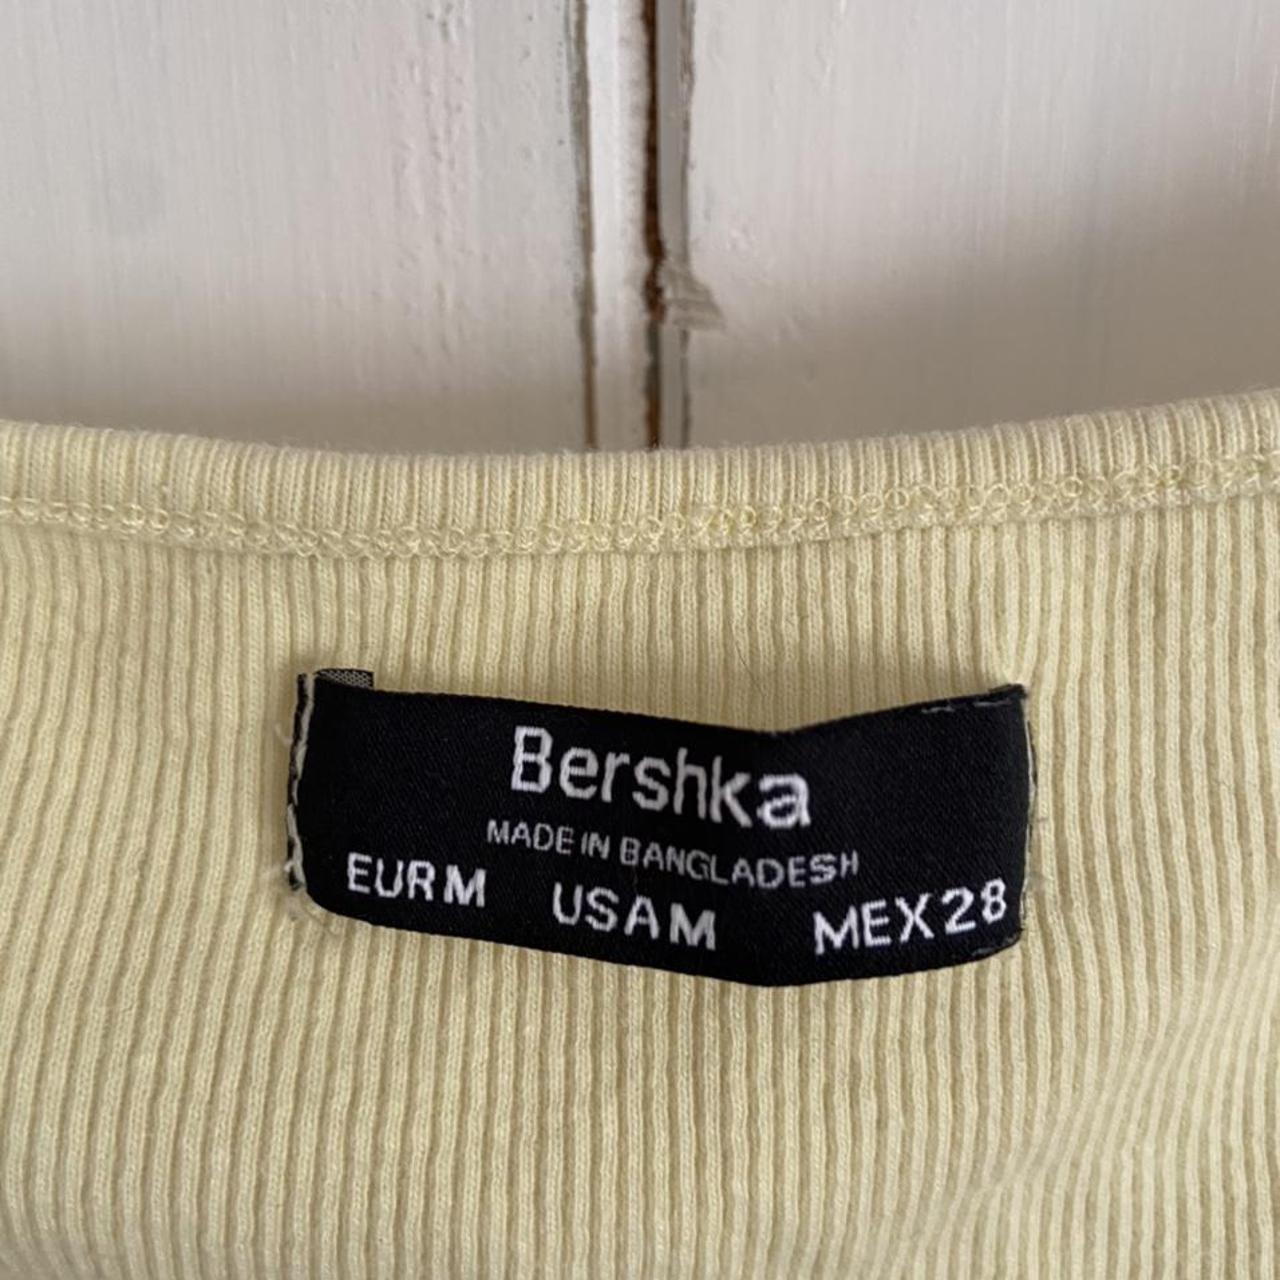 Bershka v neck yellow top. Worn but still tons of... - Depop